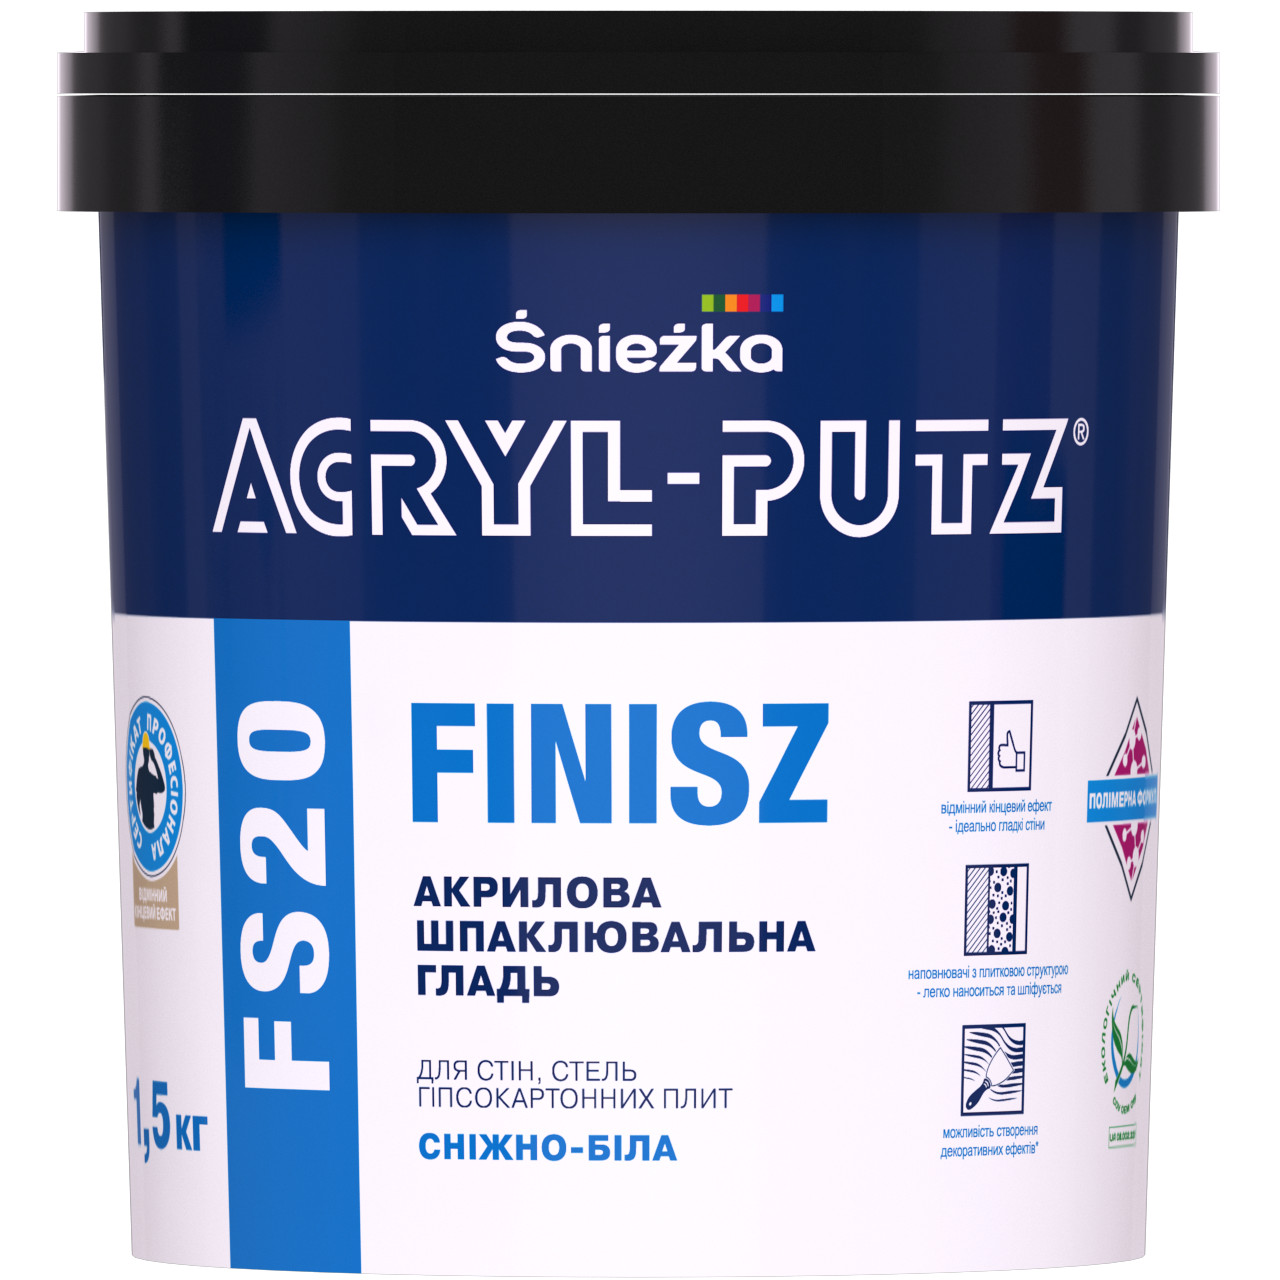 Sniezka ACRYL-PUTZ FS 20 Finisz 1,5кг - зображення 1